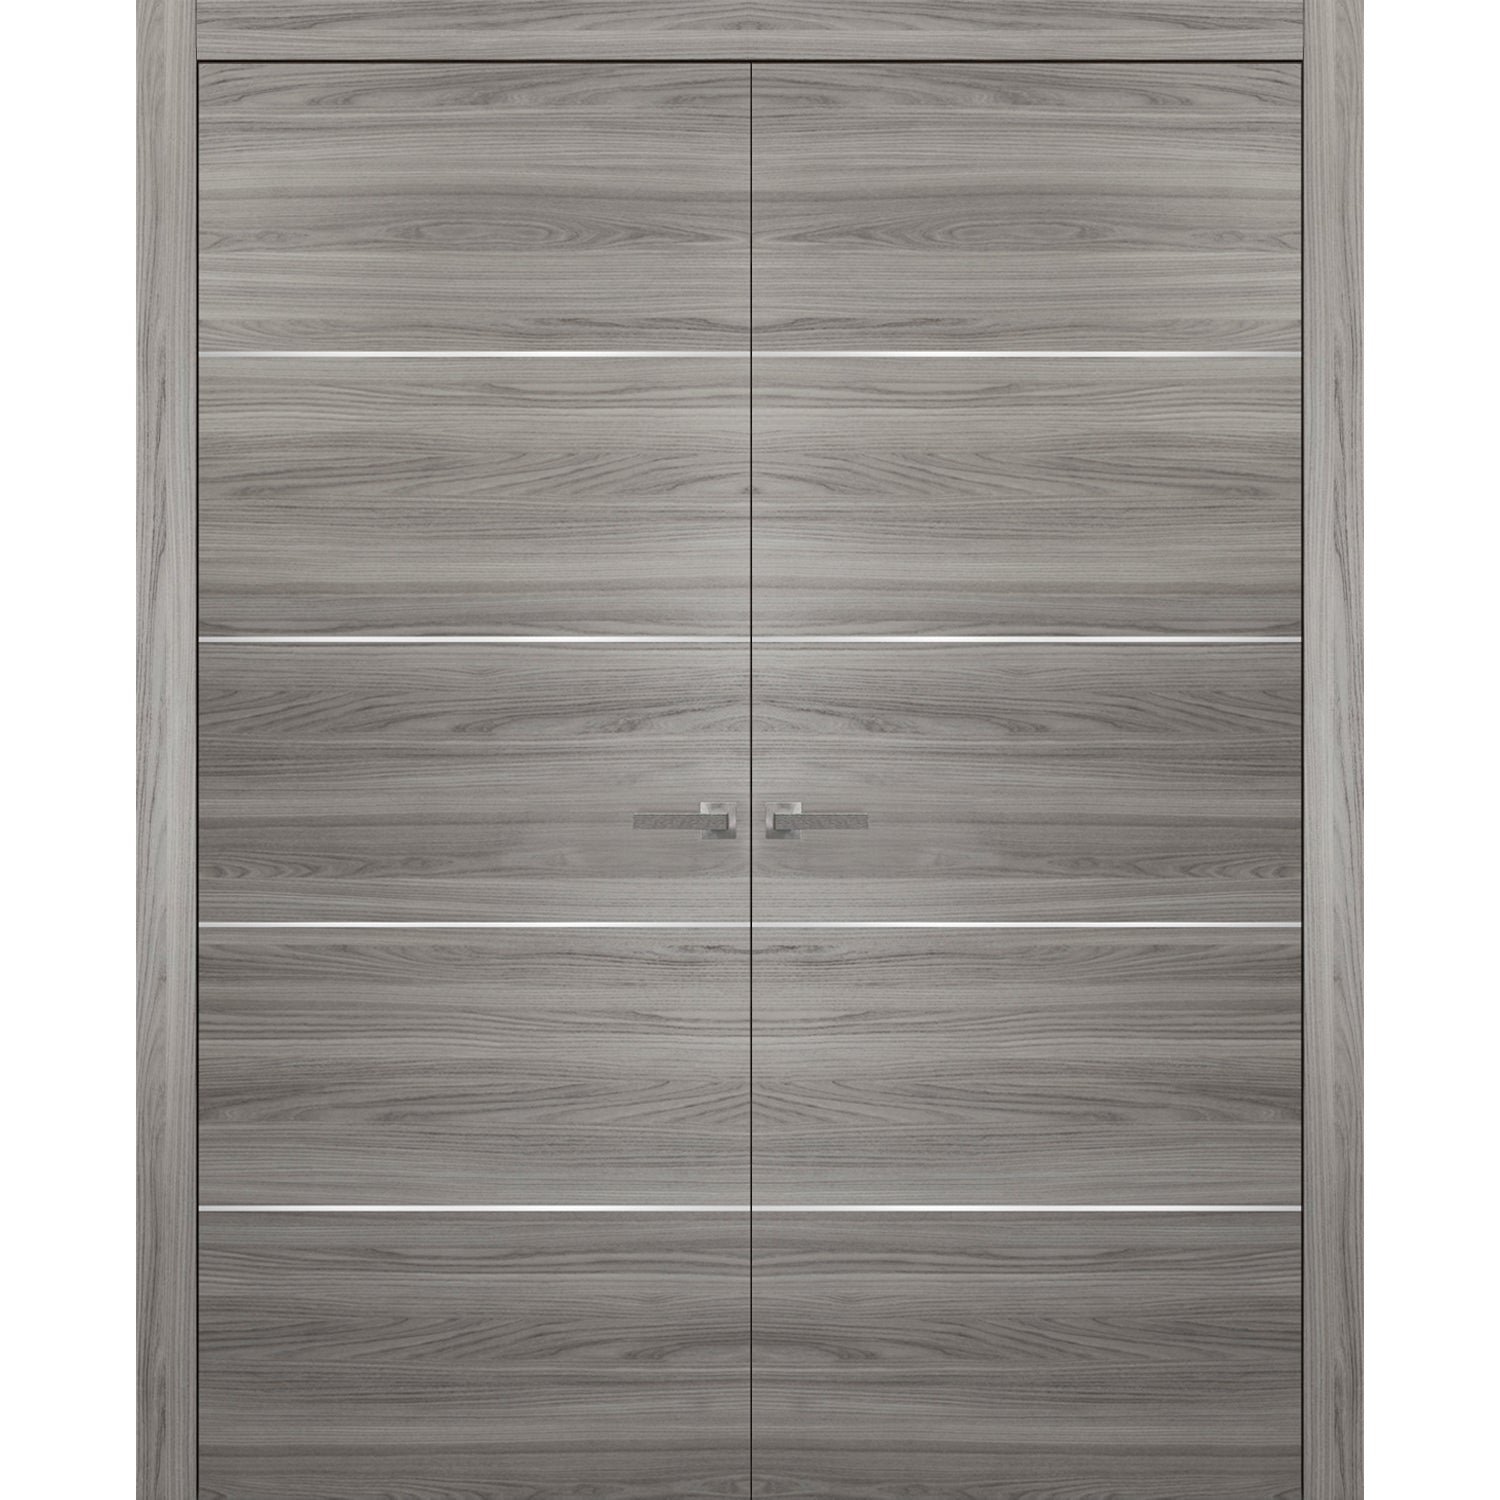 SARTODOORS Grey French Doors 56 x 96 with | Planum 0020 Ginger Ash | Frame Lever Satin Nickel Hardware | Wood Pre-hung Door